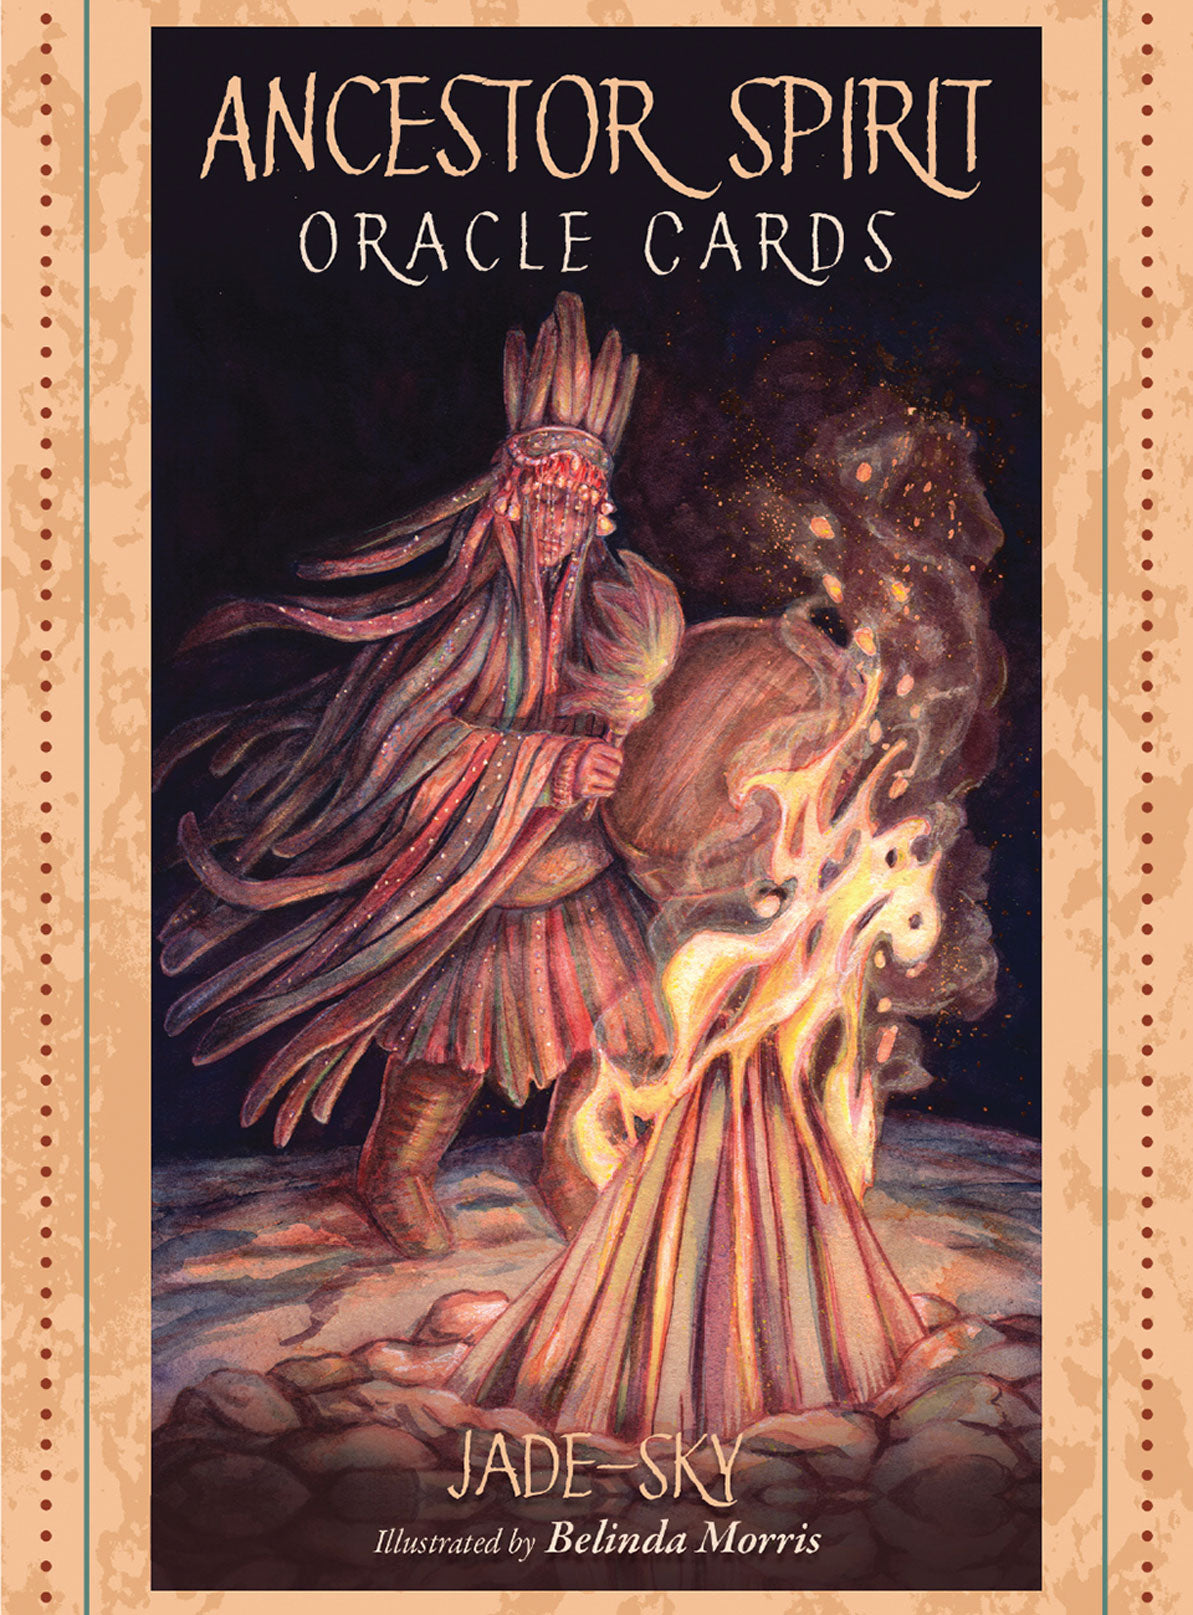 Findhorn Spirit Oracle Cards